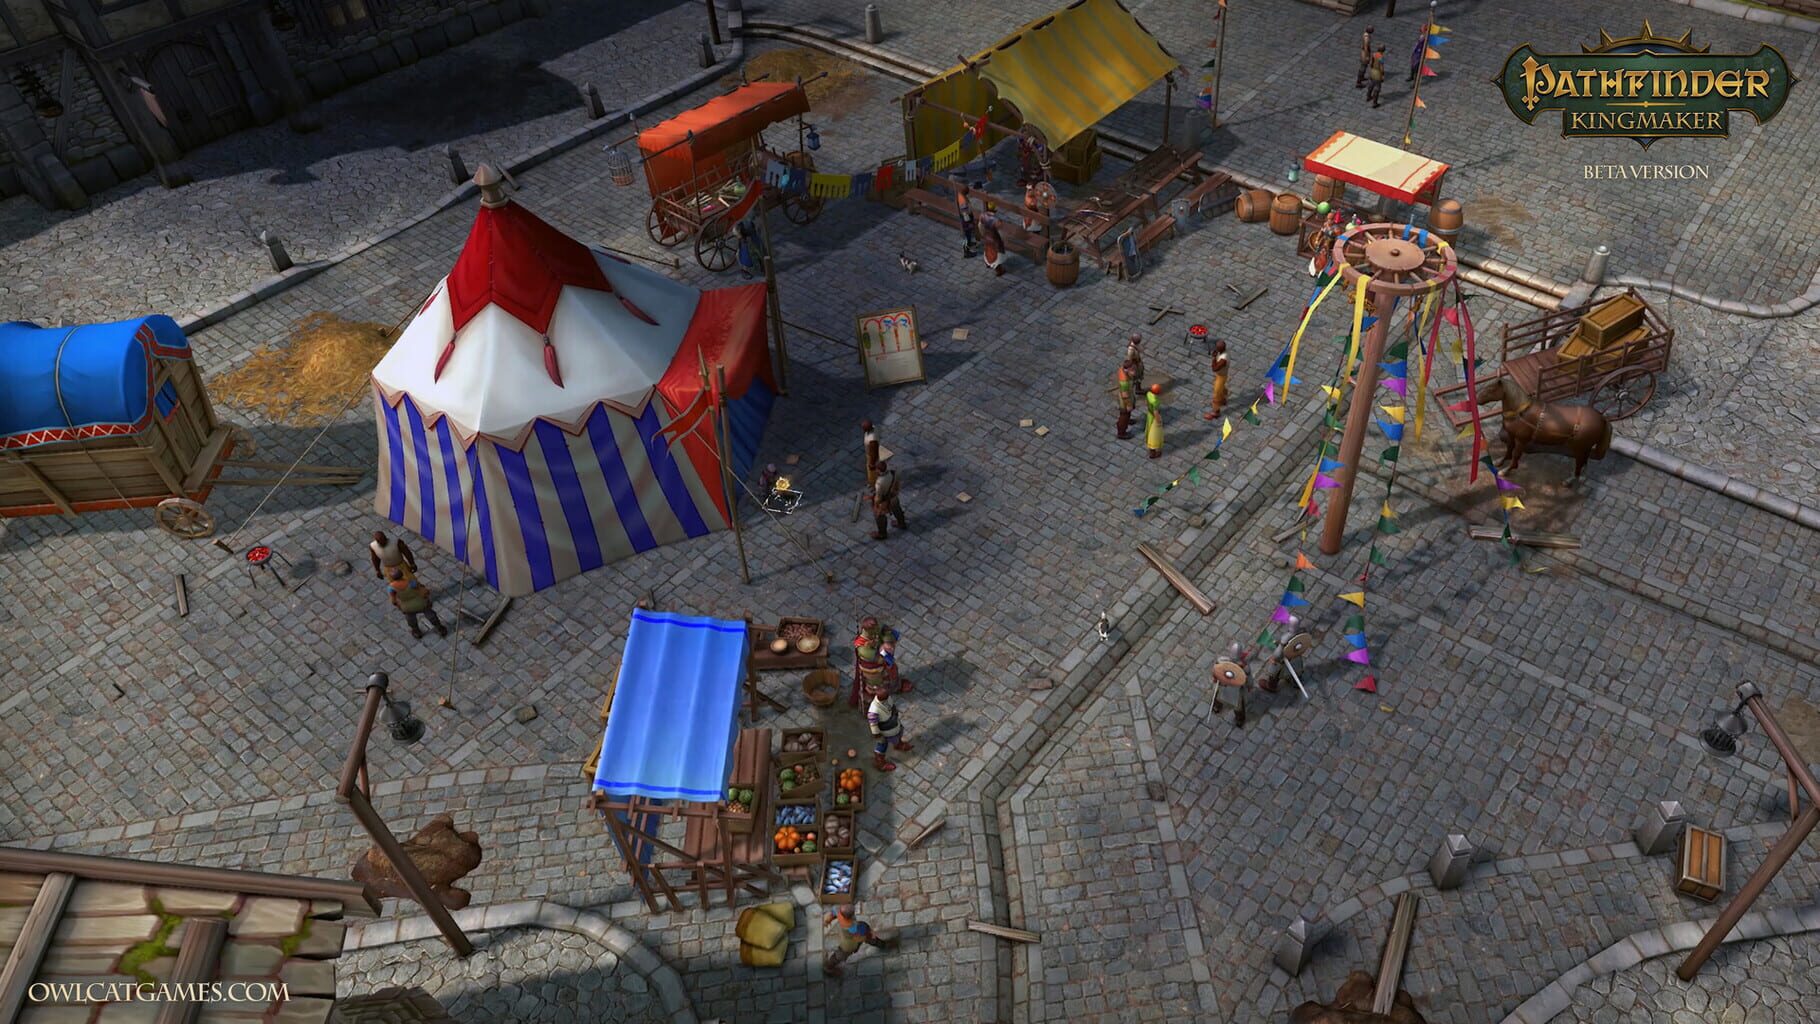 Pathfinder: Kingmaker screenshots